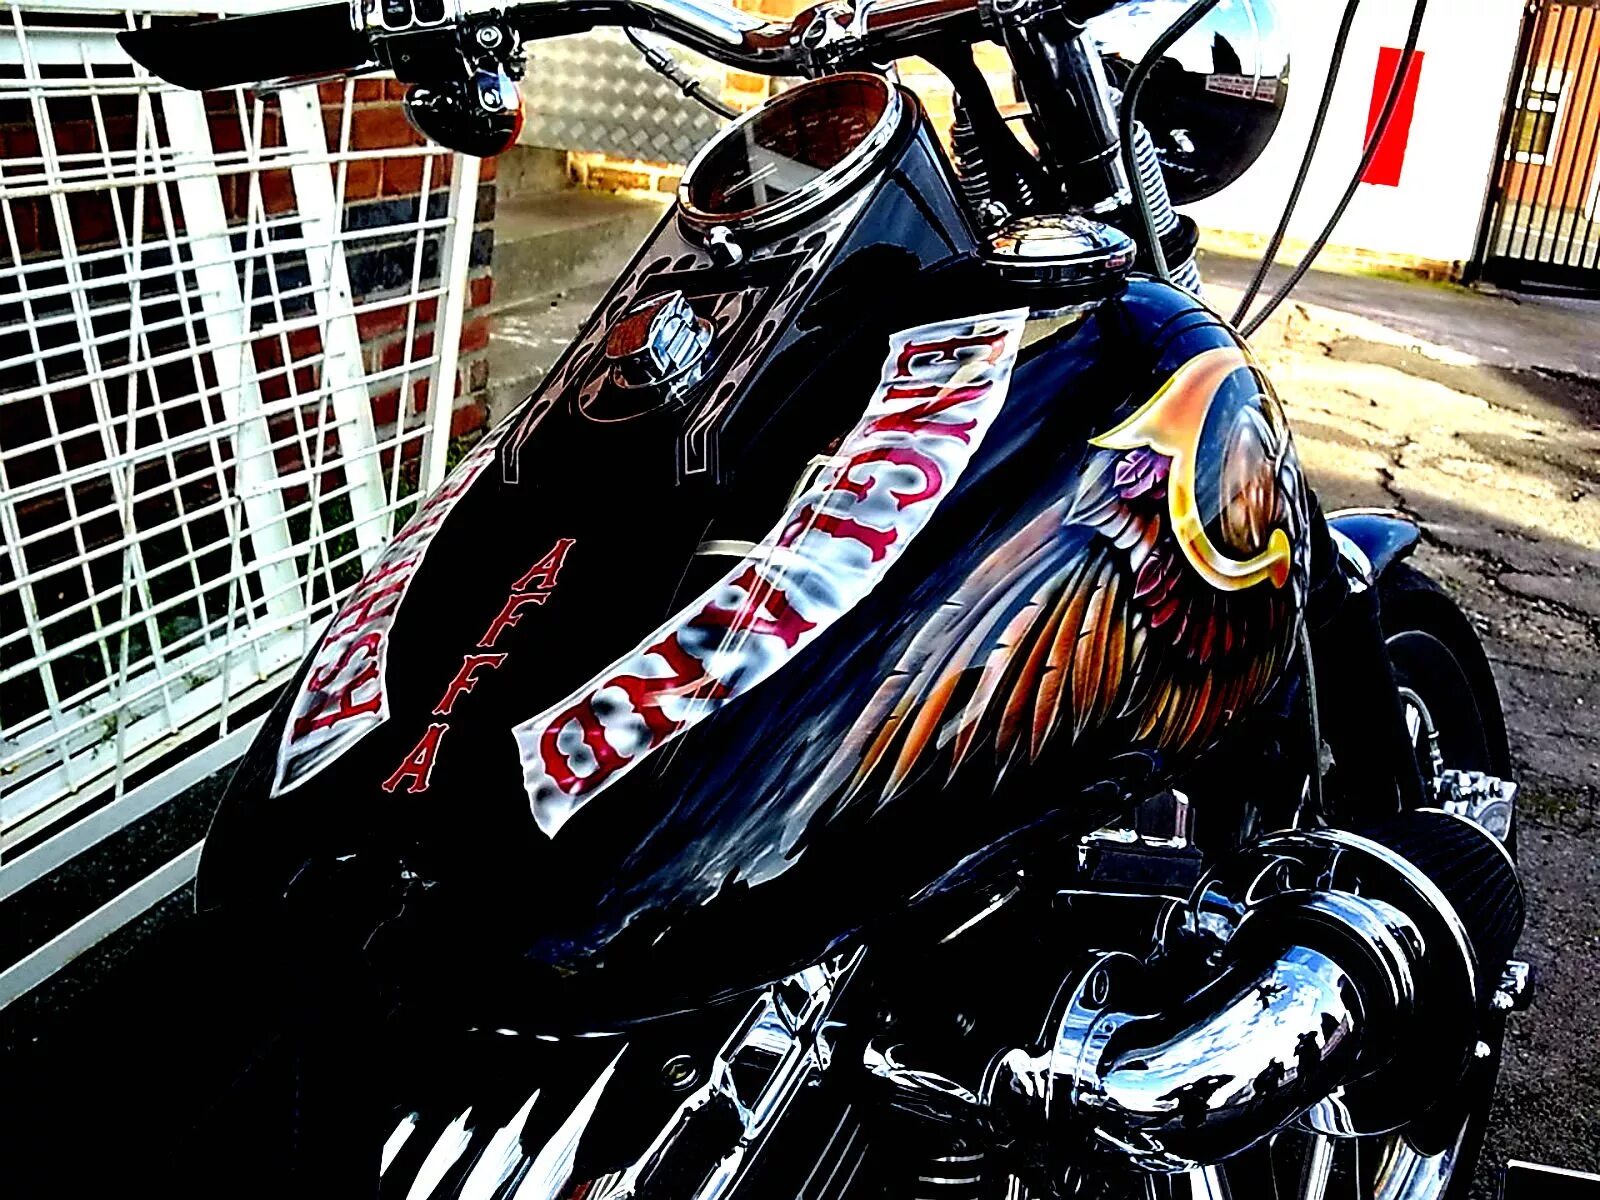 Bike of hell. Hells Angels Bikes. Байкеры. Аэрография на мотоциклах. Мотоциклы ангелов ада.